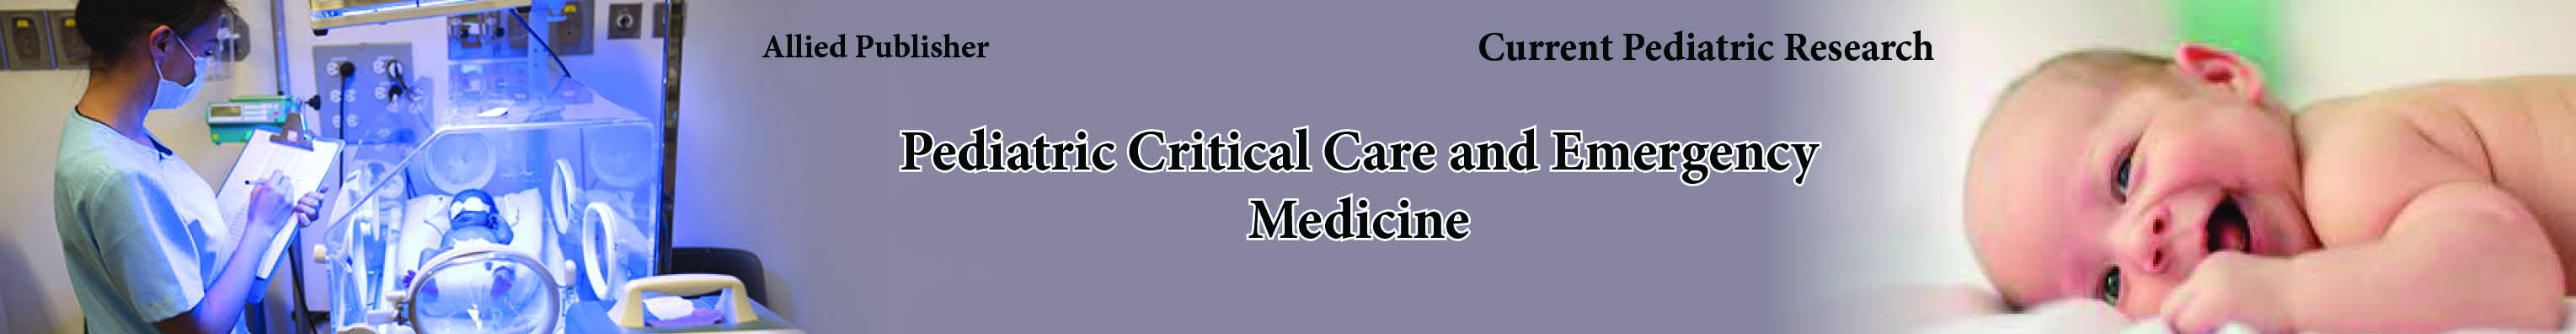 360-pediatric-critical-care-and-emergency-medicine.jpg